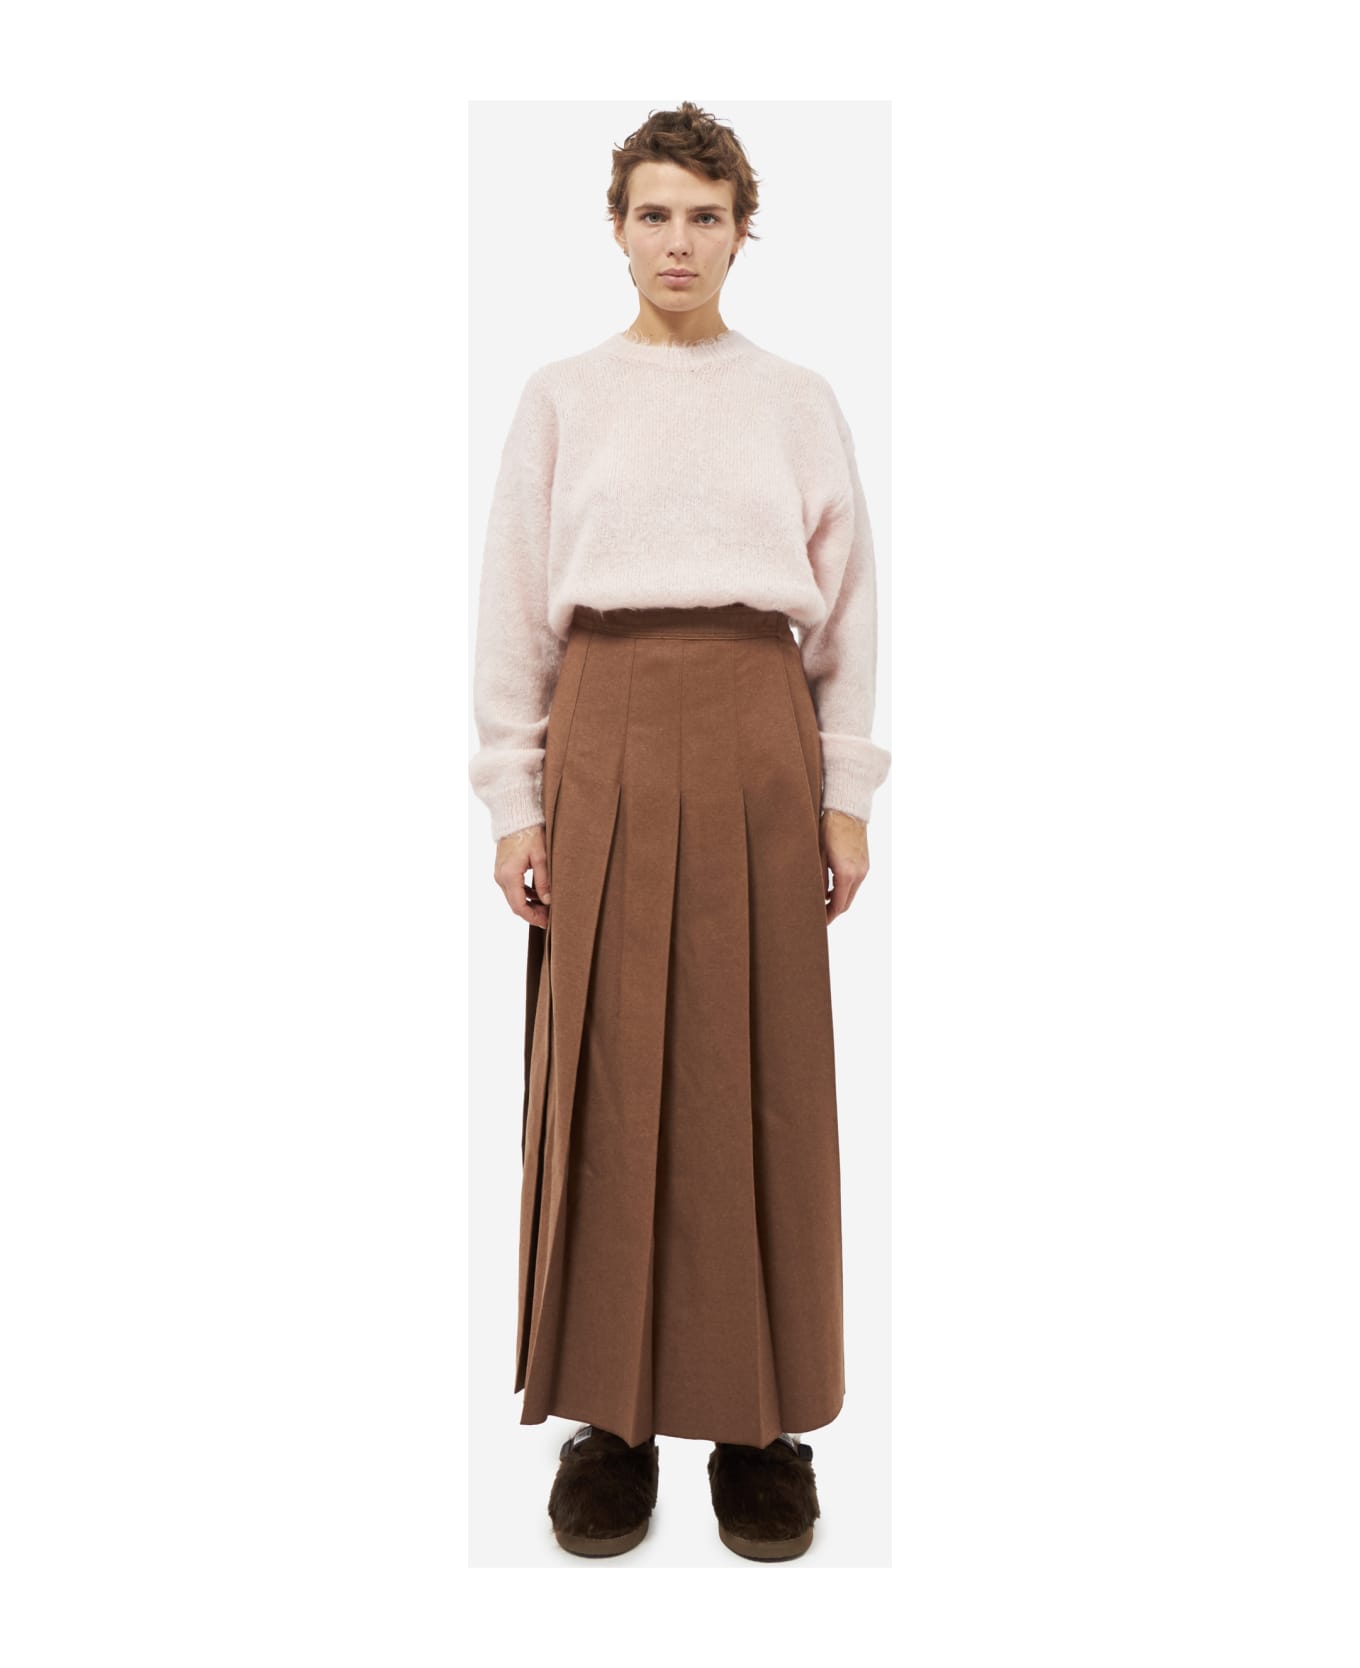 Auralee Twill Pleated Skirt - brown